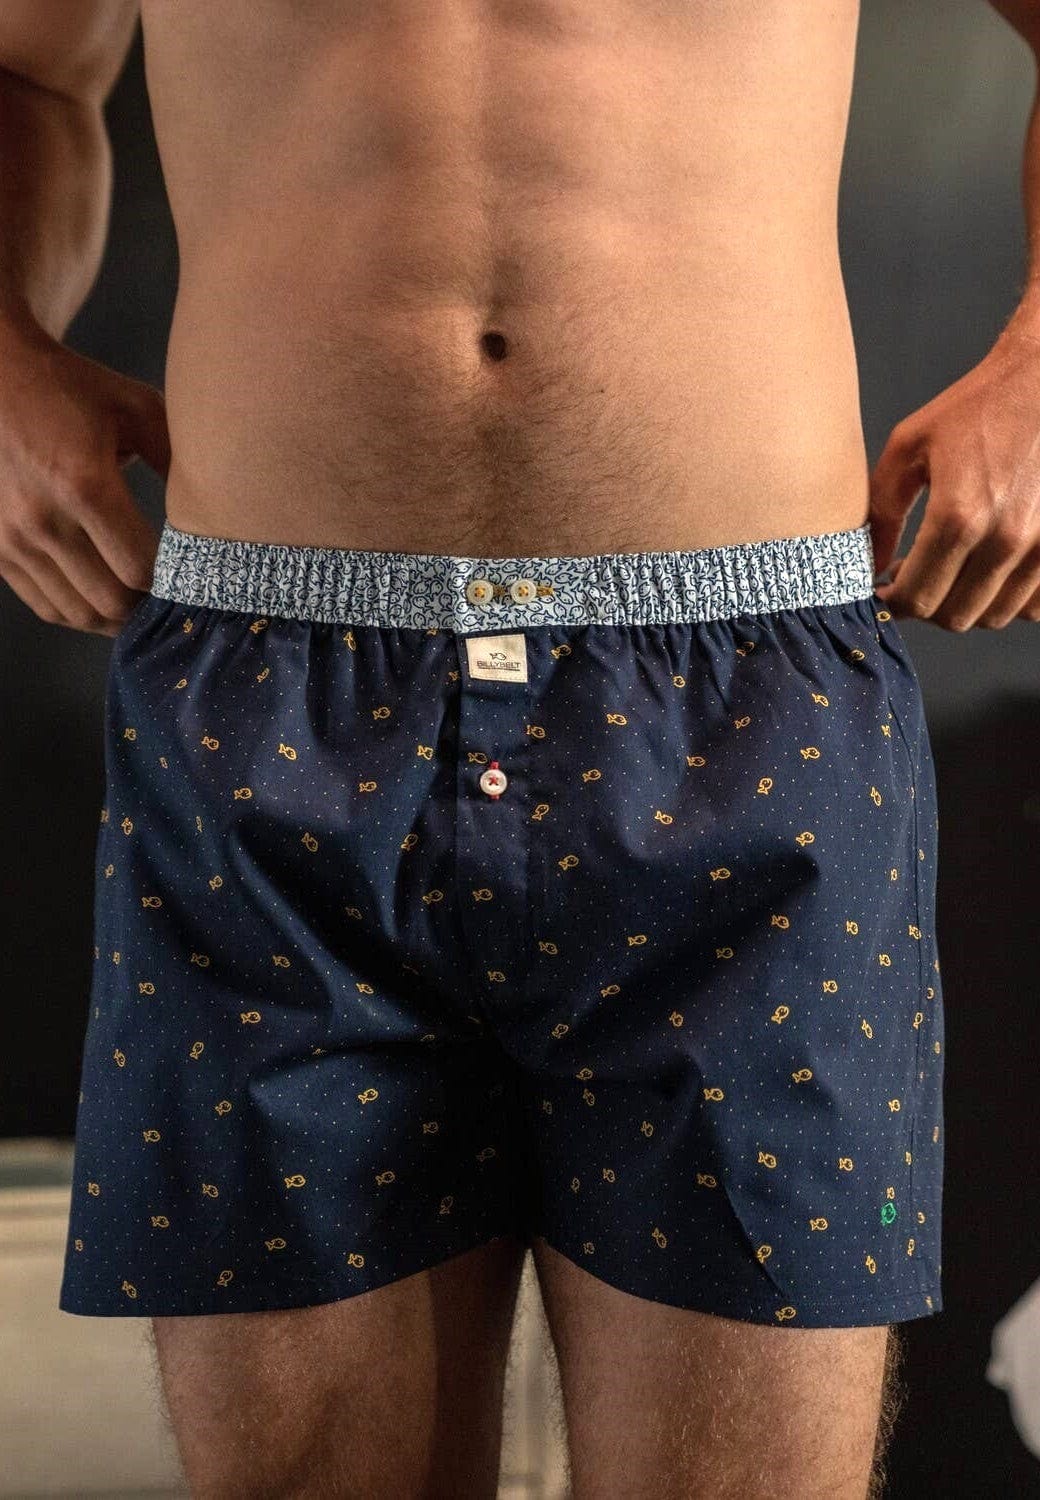 Billybelt Men's Underwear Men's Organic Cotton Boxers - Serra ca49 (M, L, XL, XXL)